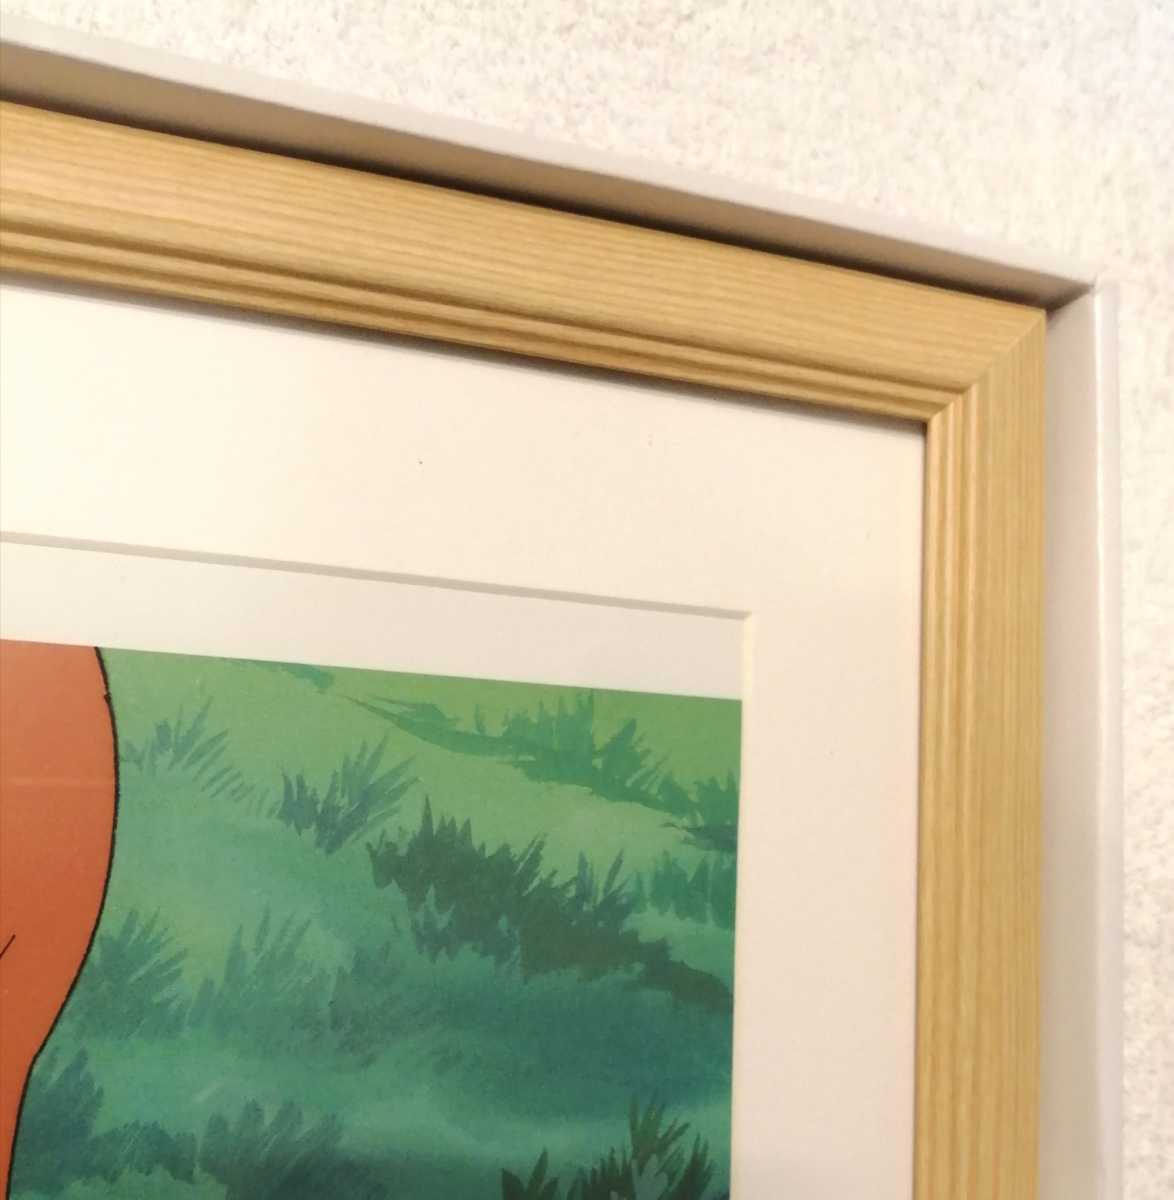  Studio Ghibli Kaze no Tani no Naushika [ рамка товар ] Nausicaa постер календарь осмотр ) Ghibli цифровая картинка . производства исходная картина открытка Miyazaki .